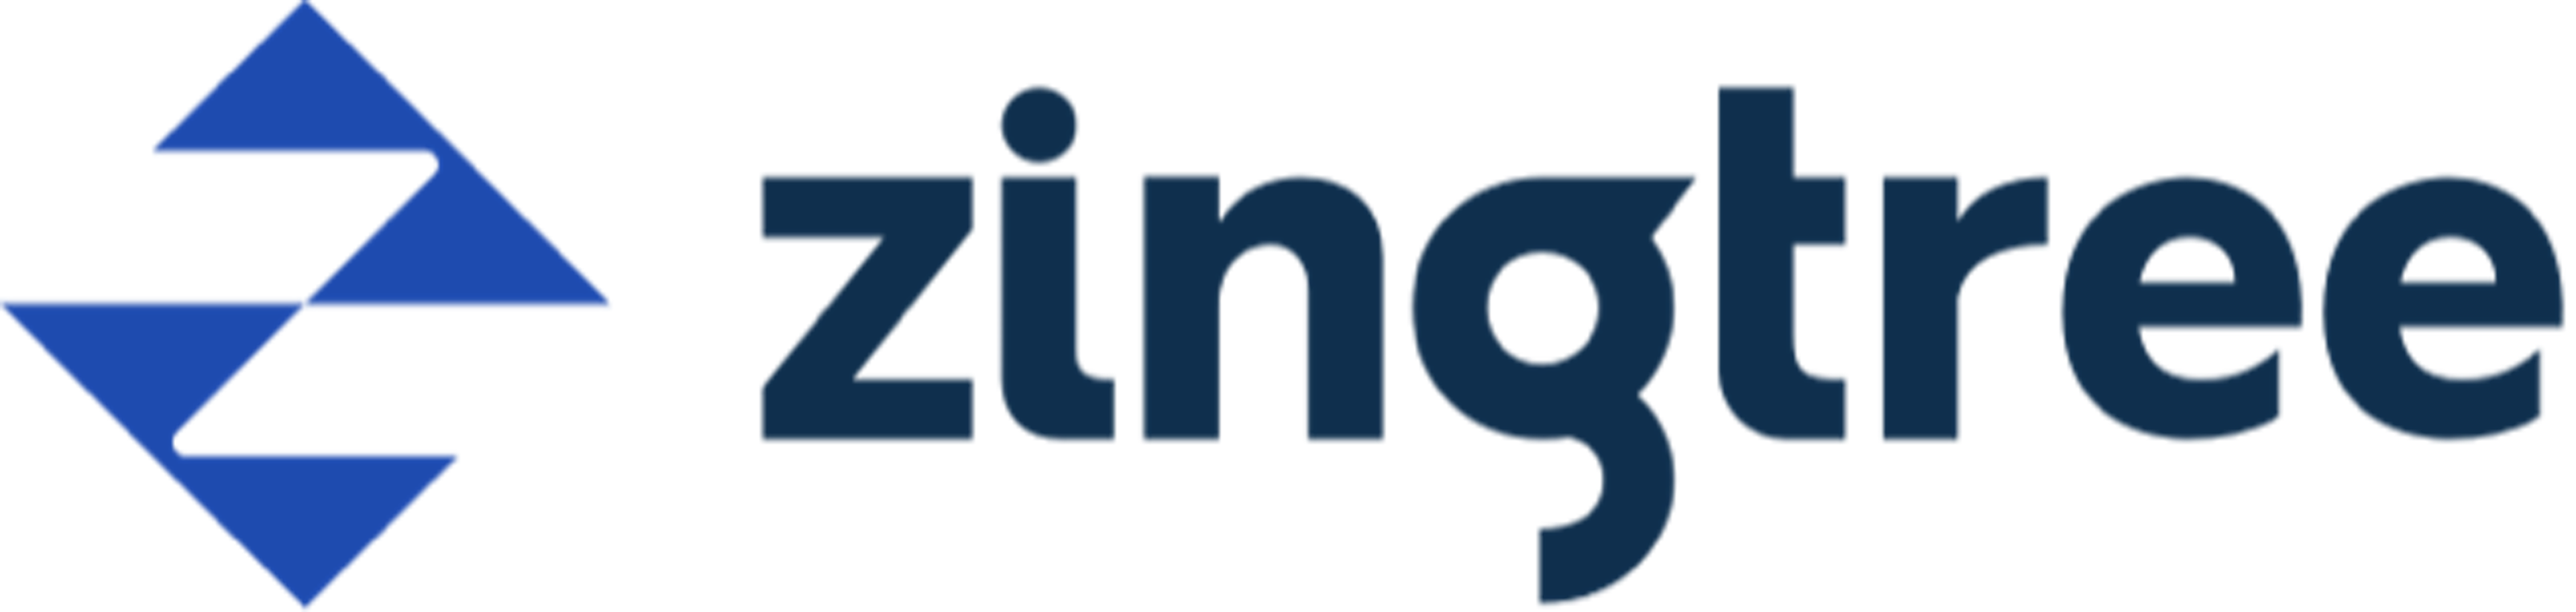 Zingtree Logo